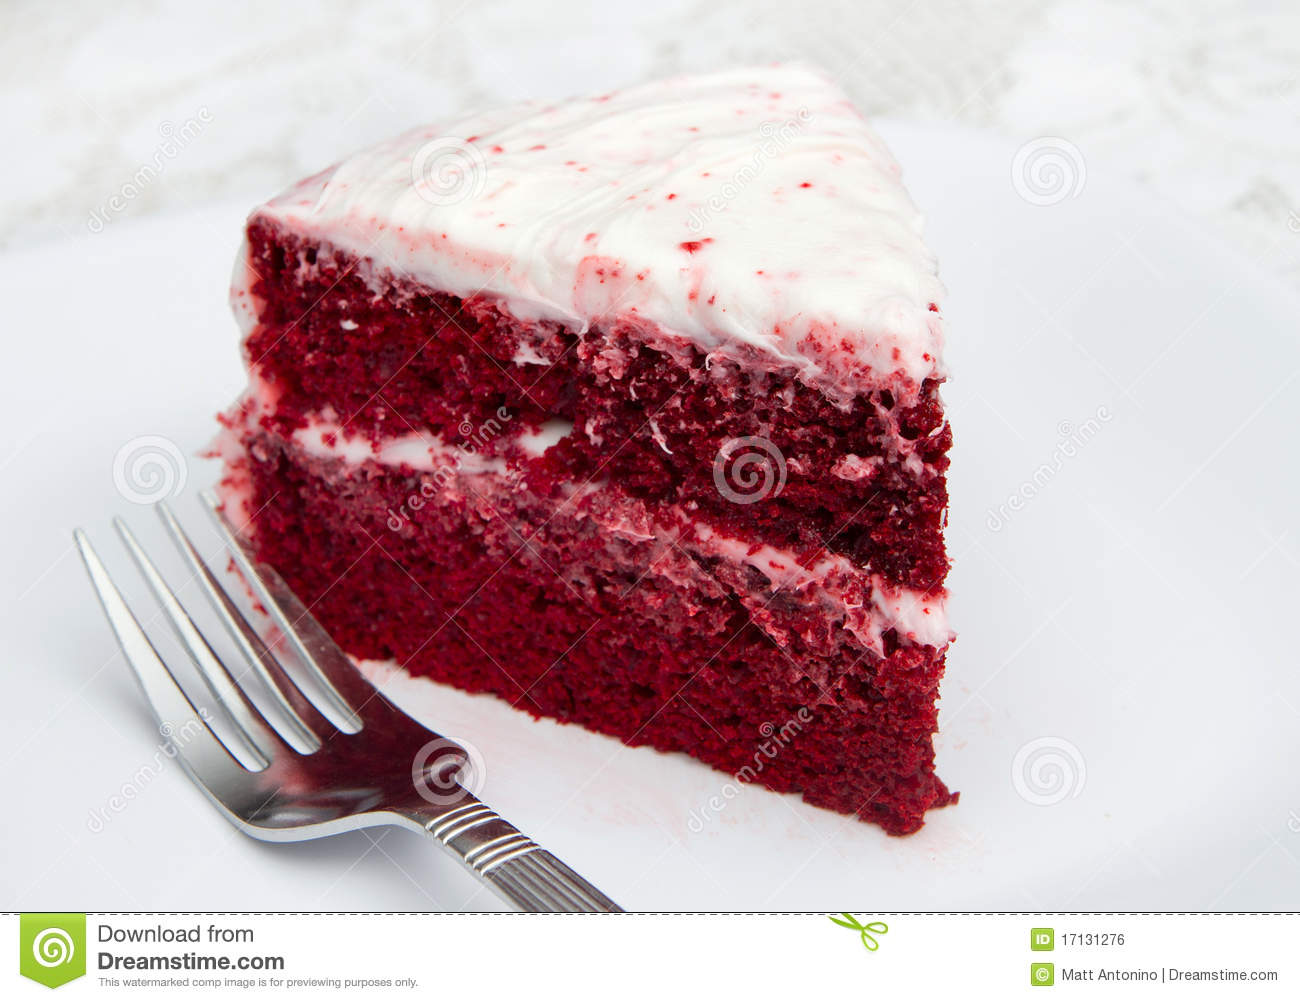 Red Velvet Cake Royalty Free Stock Image   Image  17131276